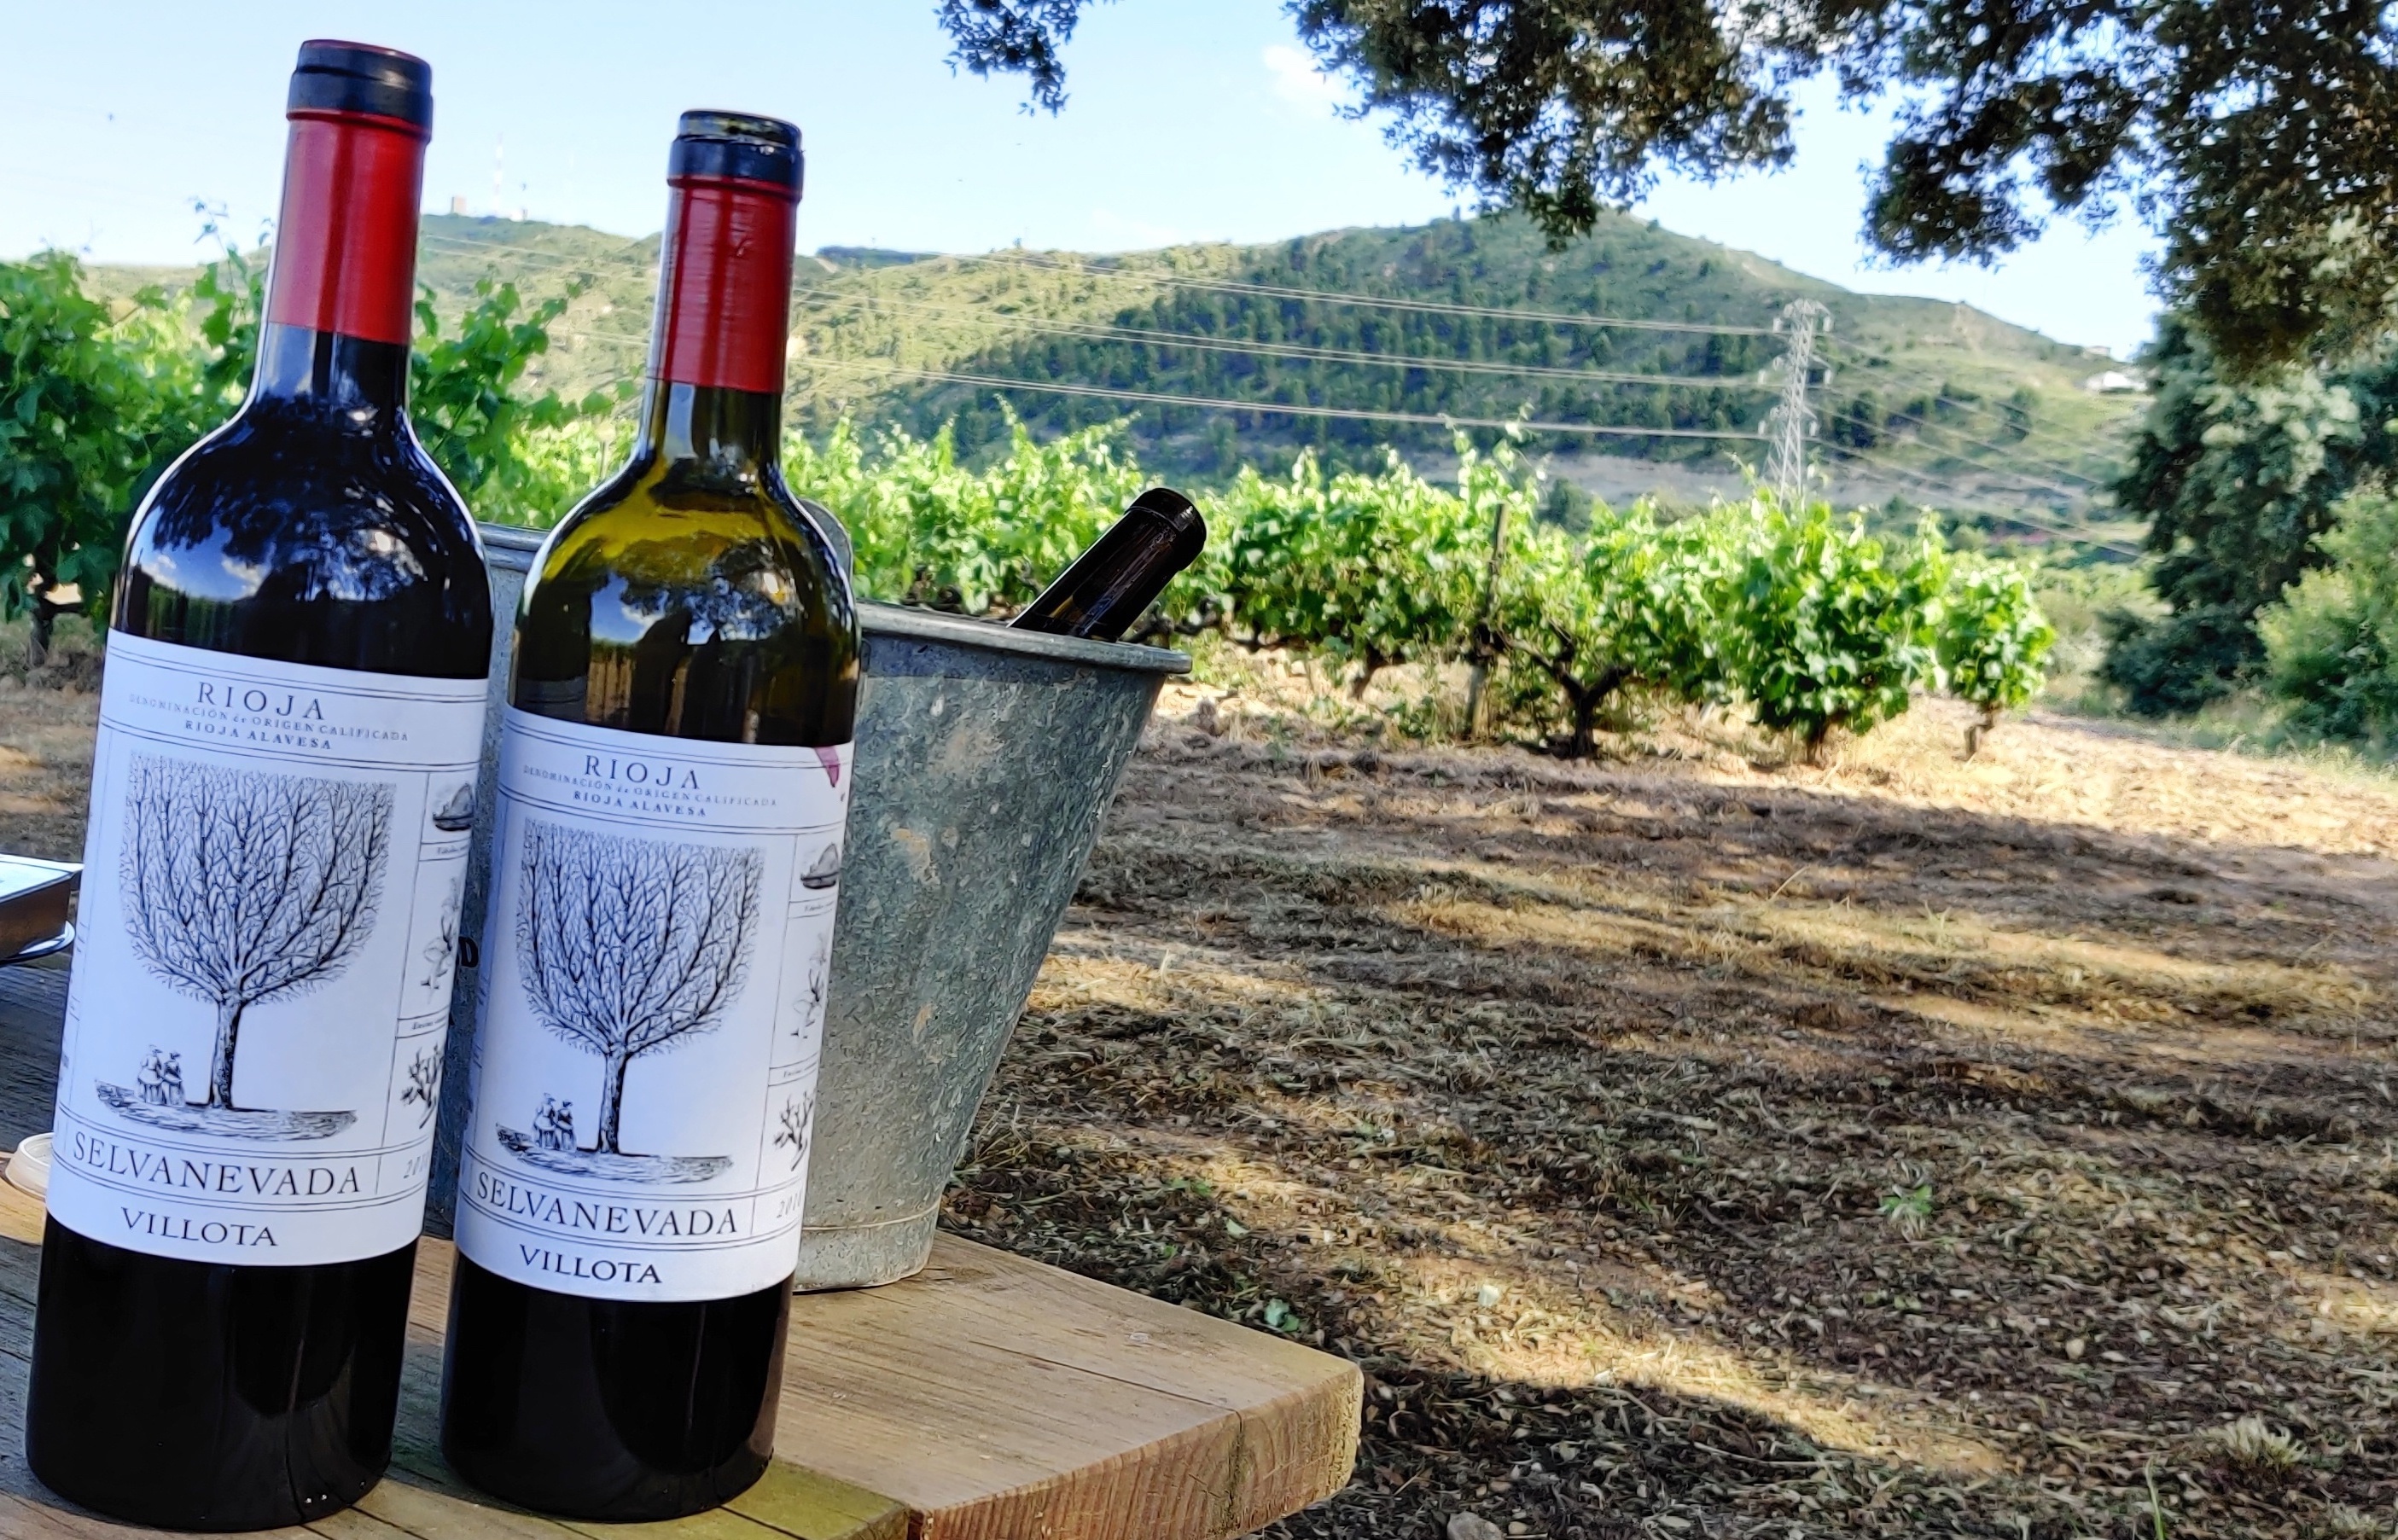 Villota: vinos de meandro en Rioja Alavesa